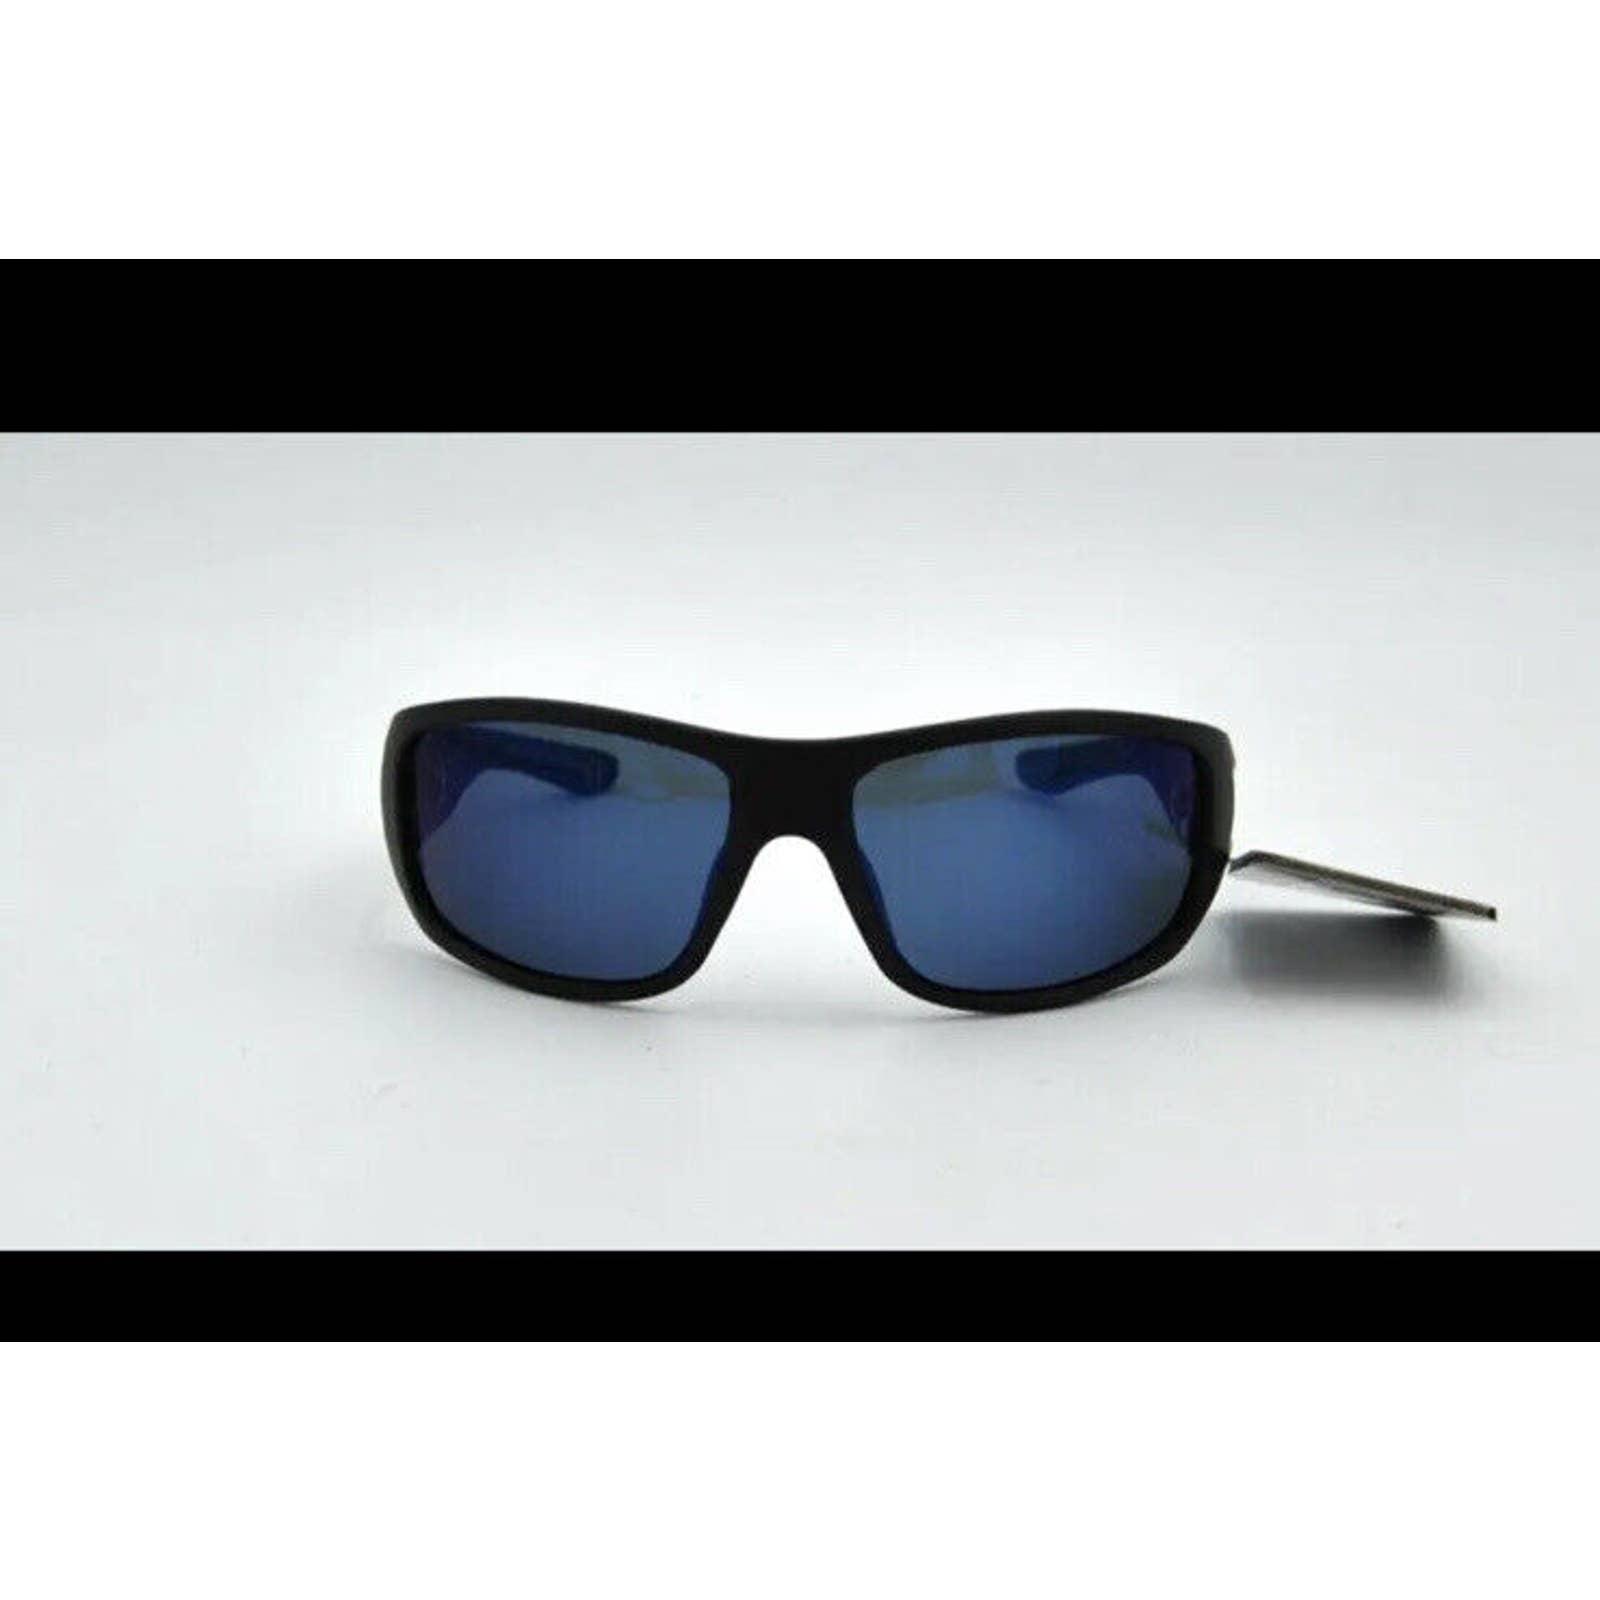 MEN Foster Grant Advance Comfort 14 960 POLARIZED sunglasses 100% UVA –  Waleska Co.